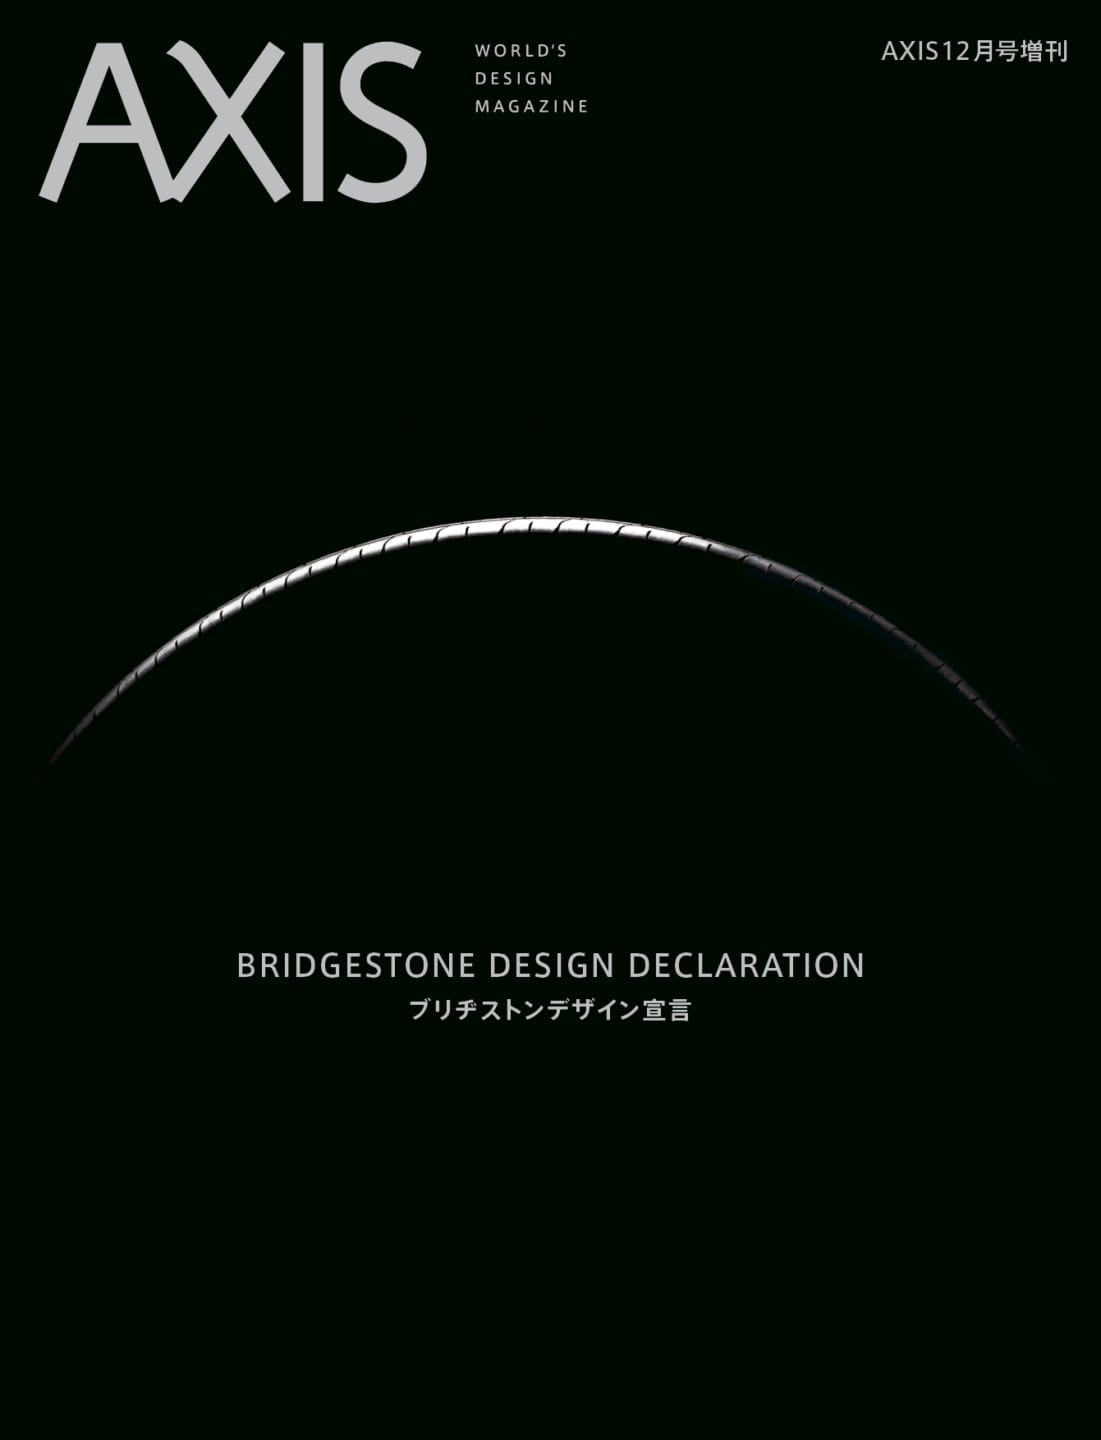 AXIS 12月号増刊「ブリヂストンデザイン宣言」 2021年12月22日（水）発売です。